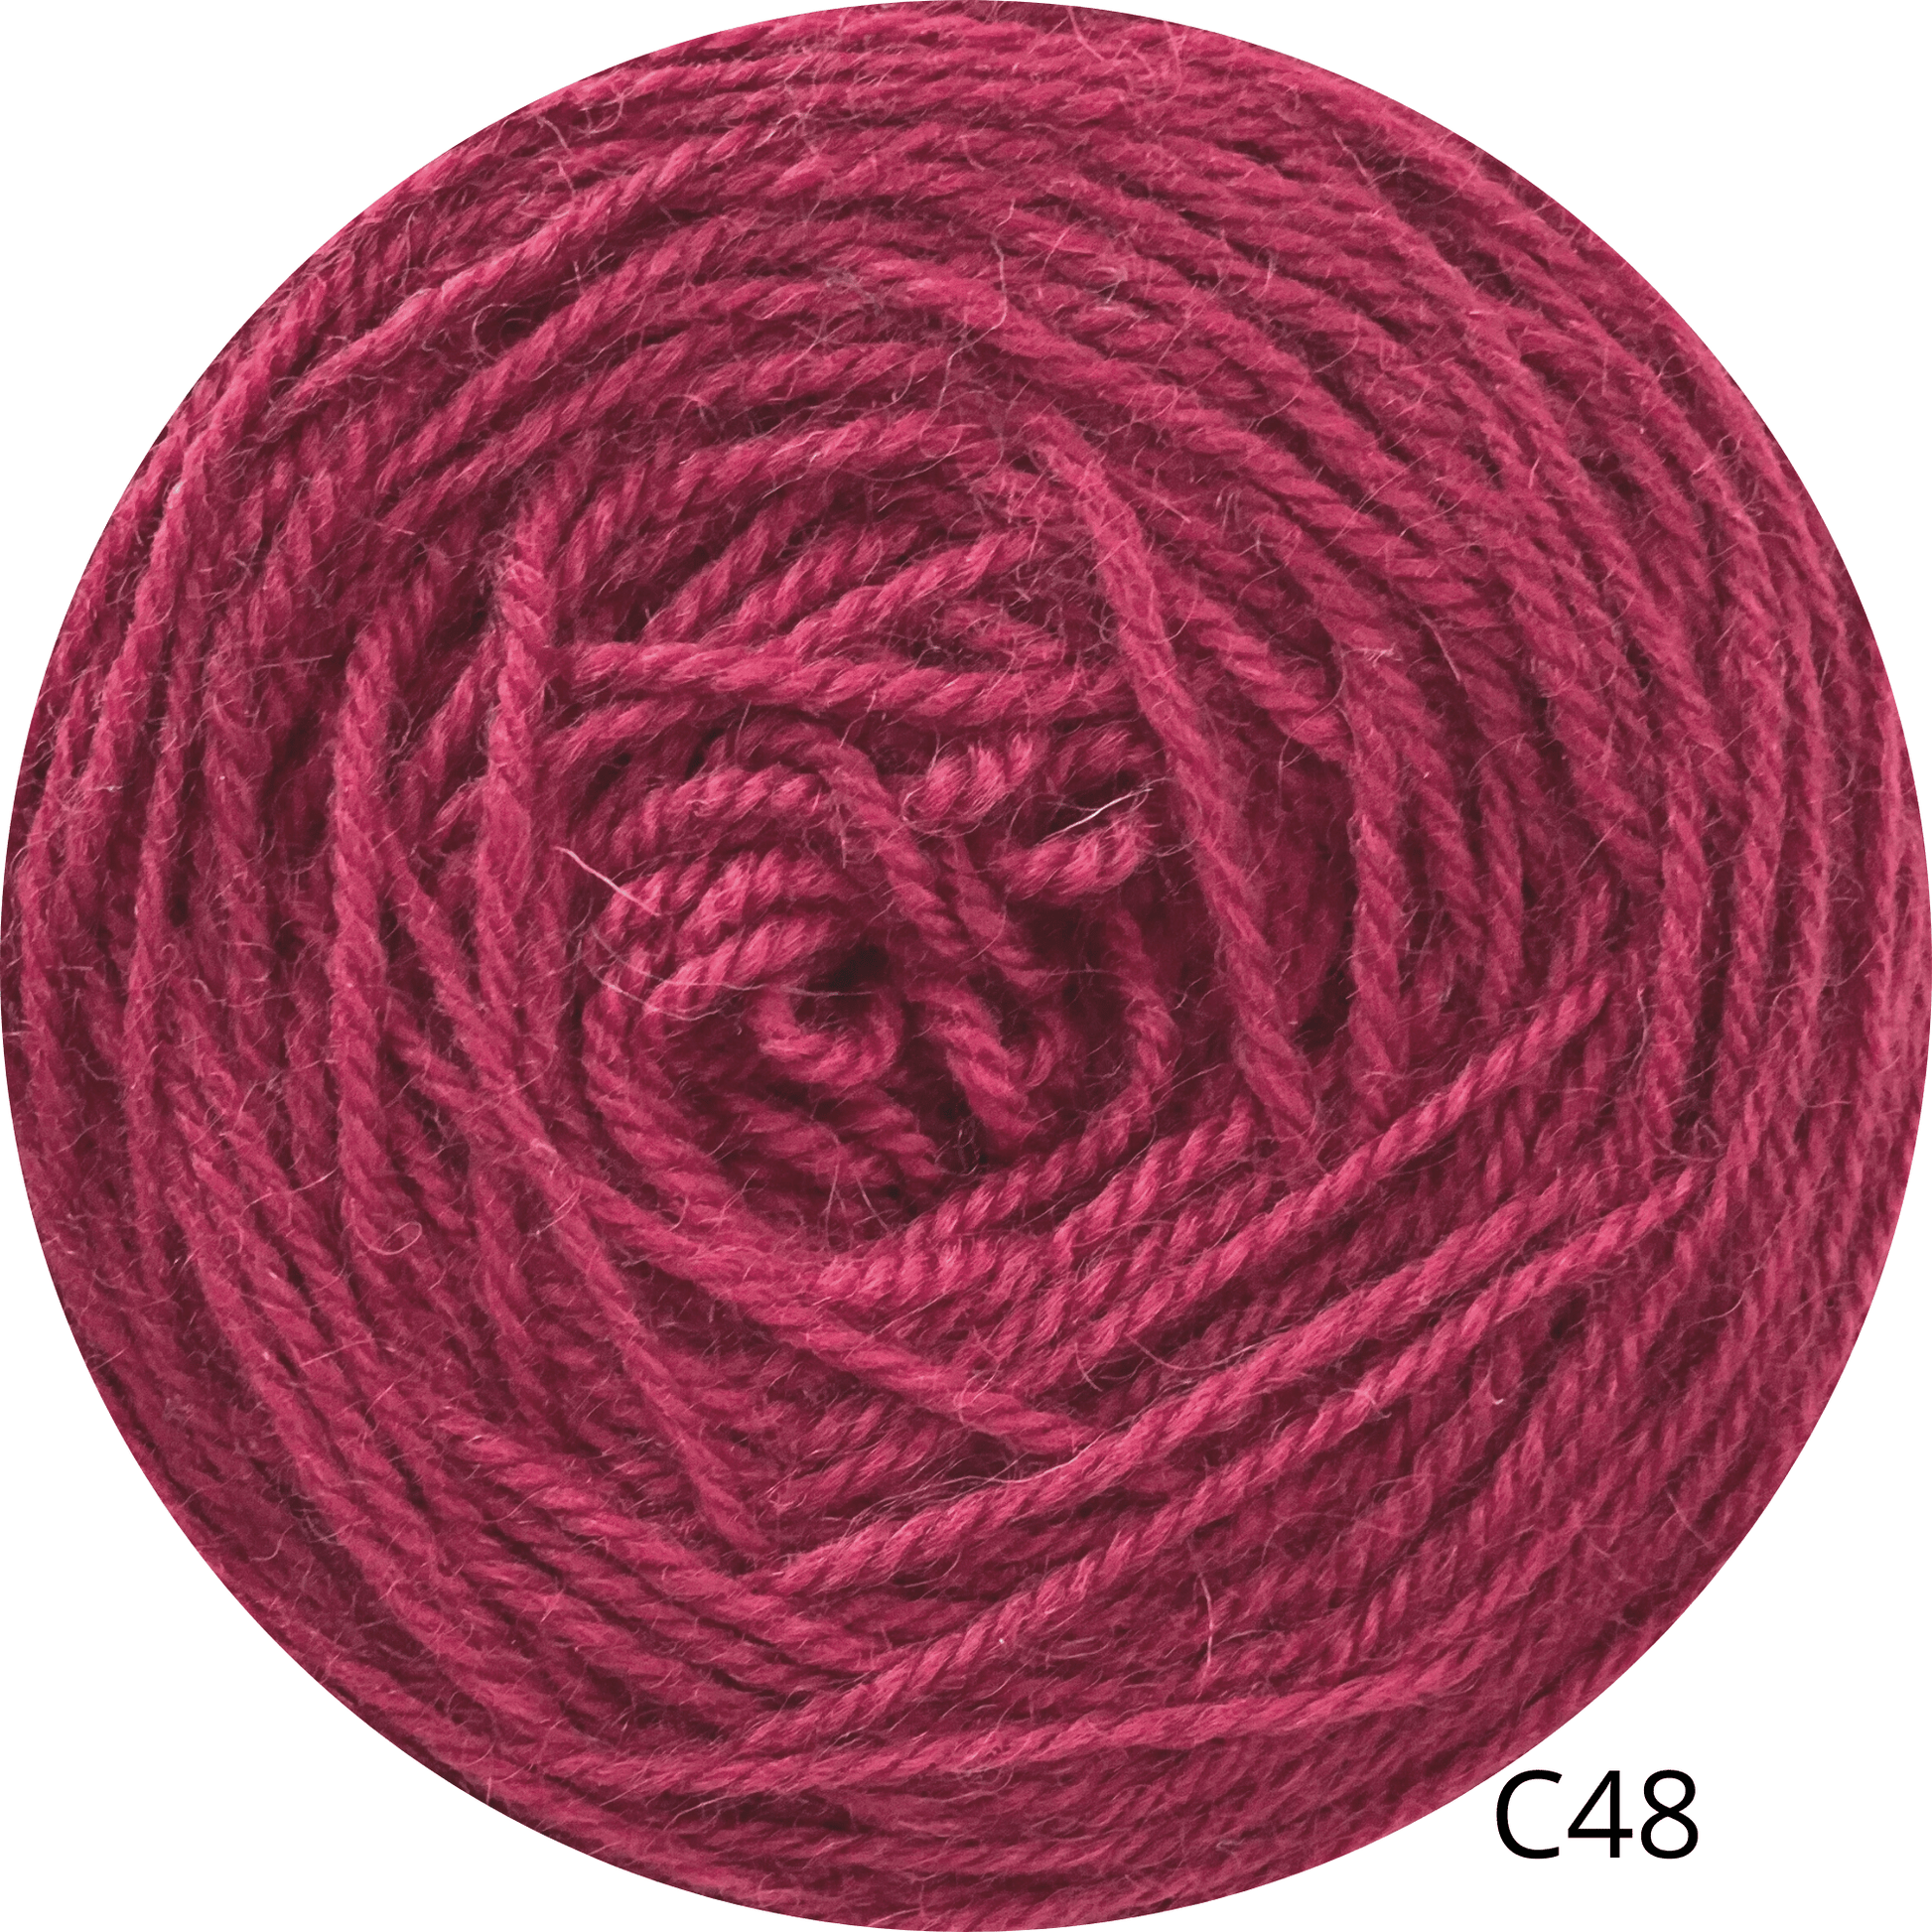 Lanabel Lana natural C48 lana natural delgada Creación Lana natural